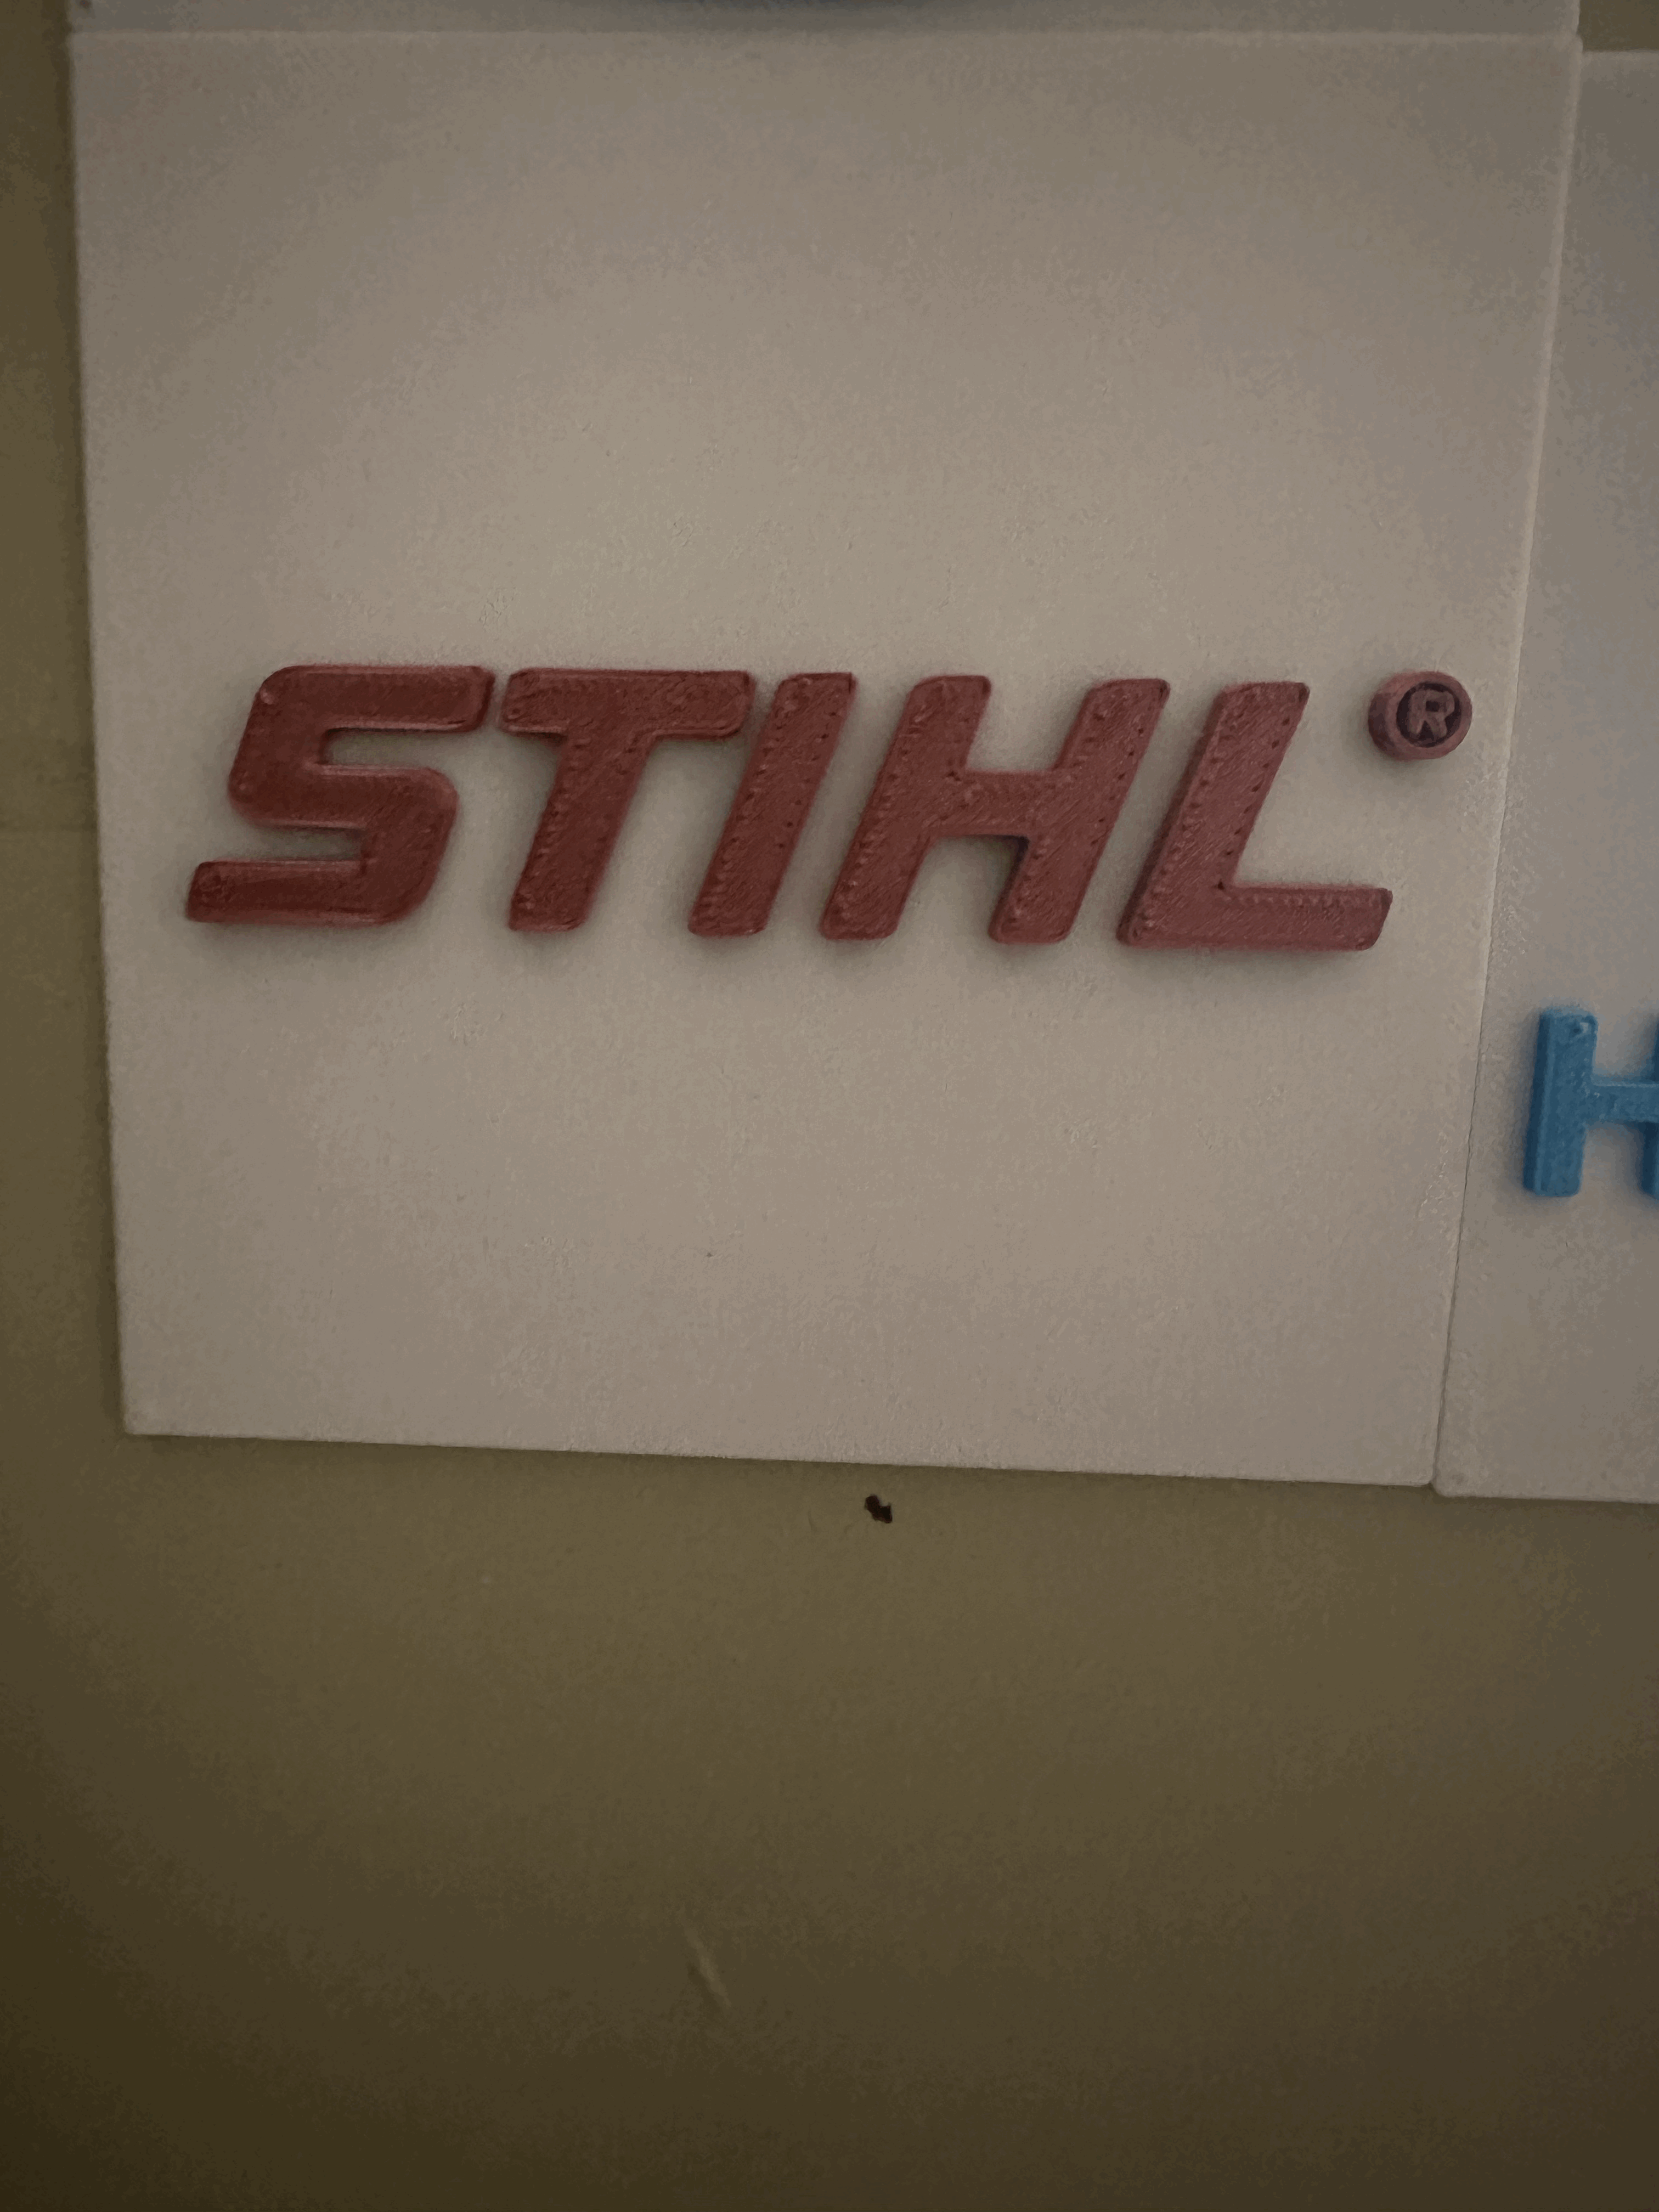 Stihl logo on a wall – Stock Editorial Photo © ricochet69 #99826540